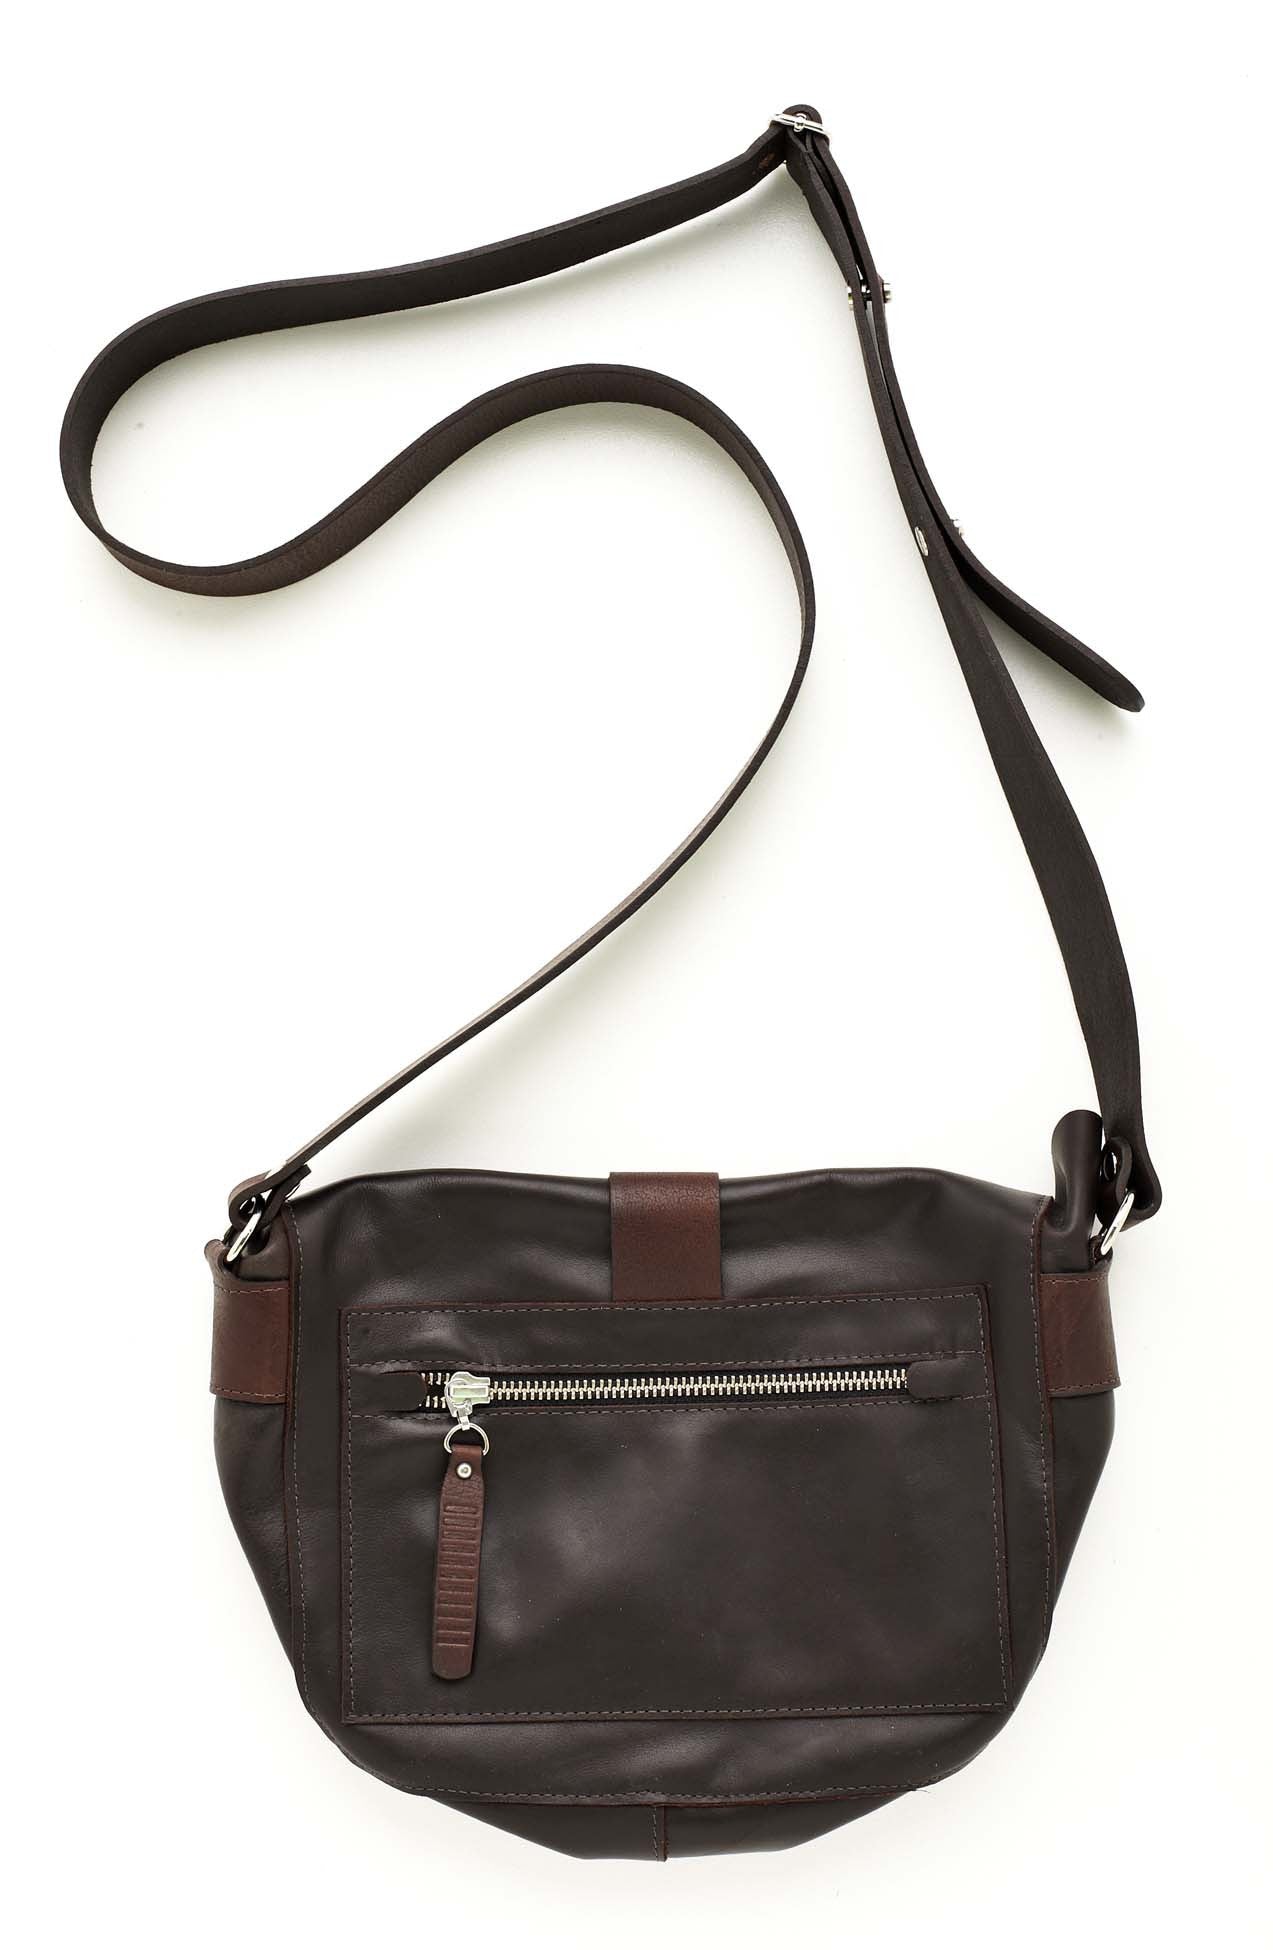 Convict Betsey satchel, reverse with zip pocket, australian made